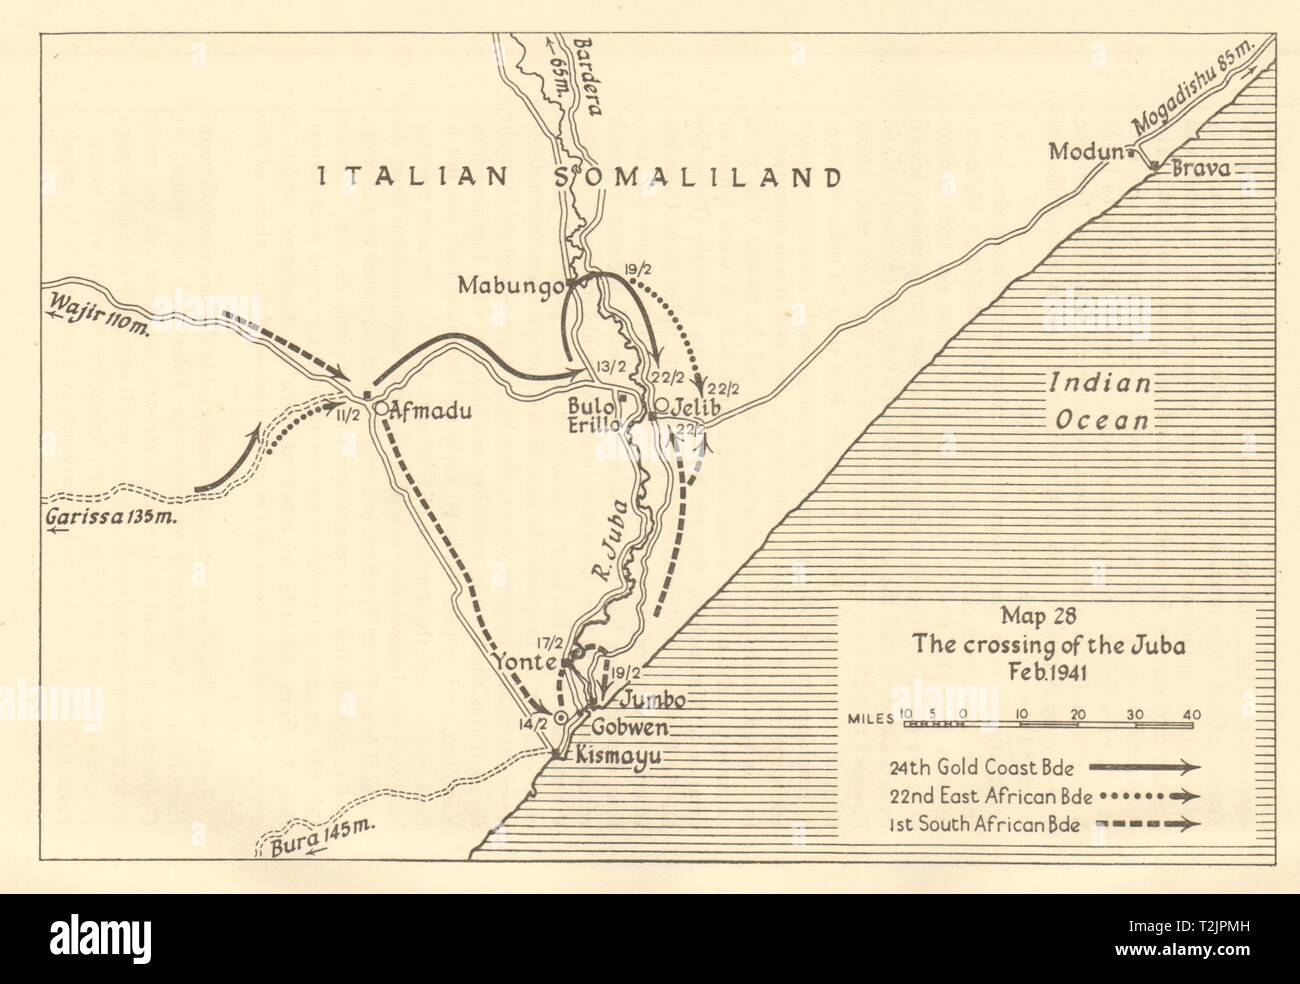 Crossing River Juba Feb 1941 Kismayo Italian Somaliland Somalia. Sketch map 1954 Stock Photo